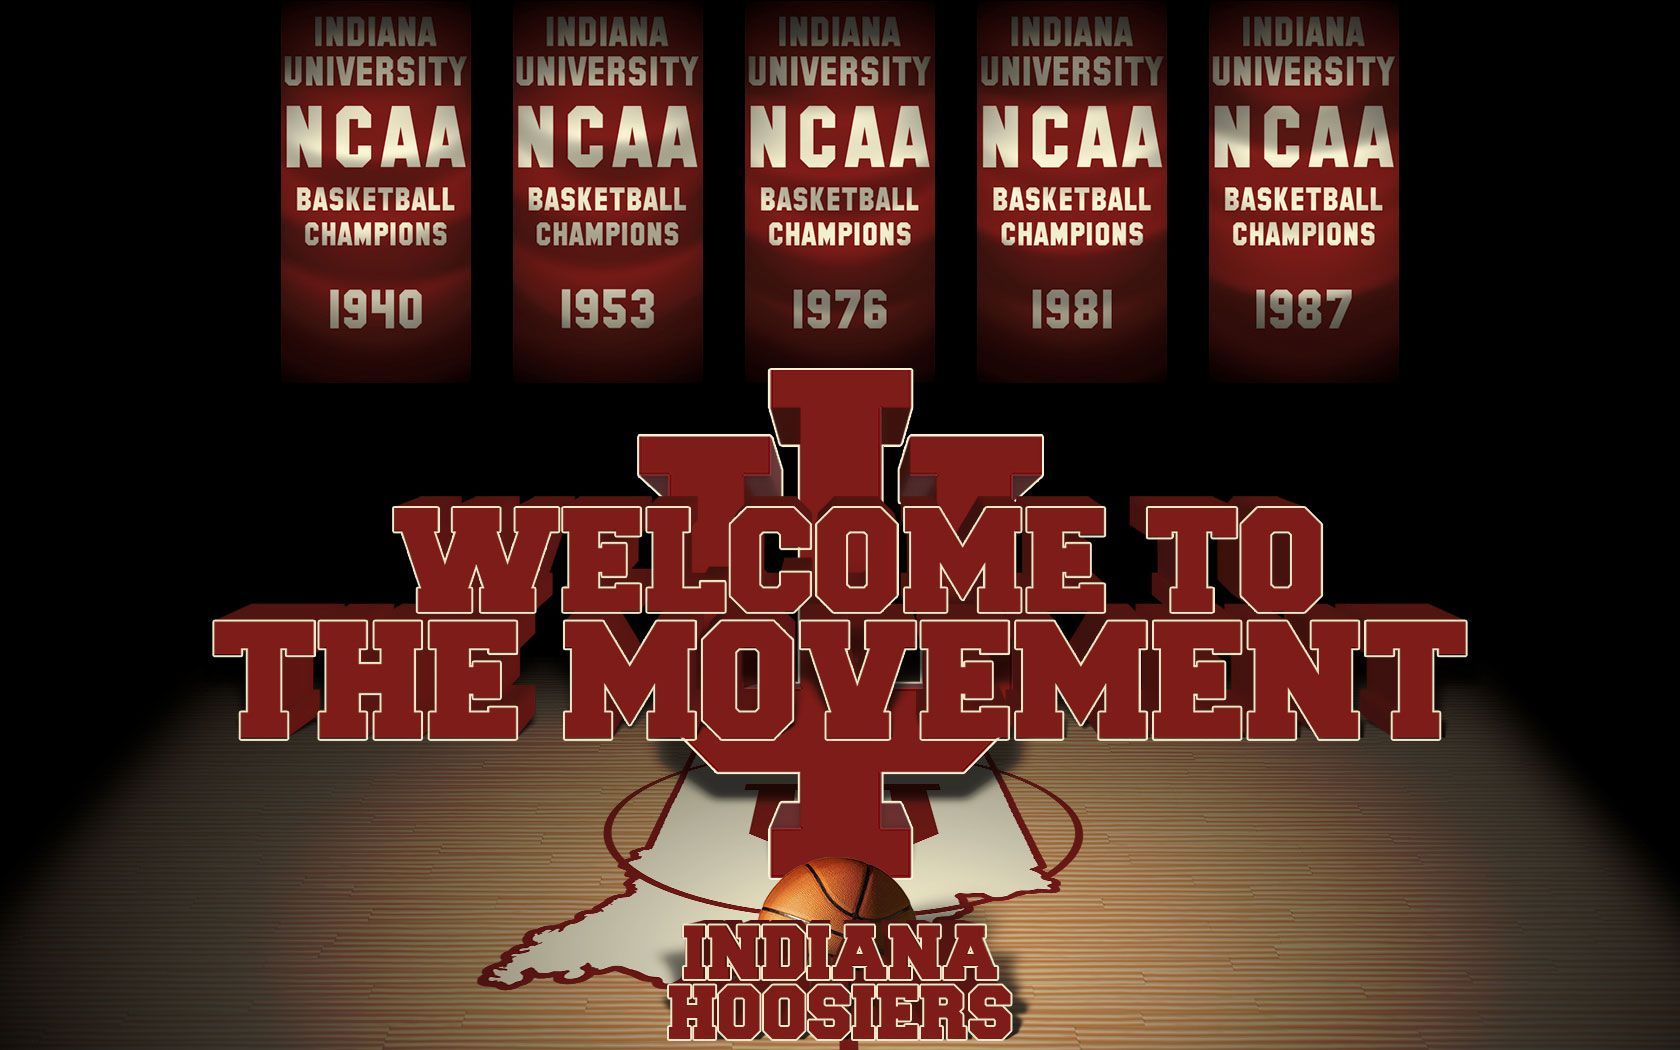 Indiana University Hoosiers 1680x1050 Wallpaper. Indiana hoosiers basketball, Indiana university, Hoosiers basketball